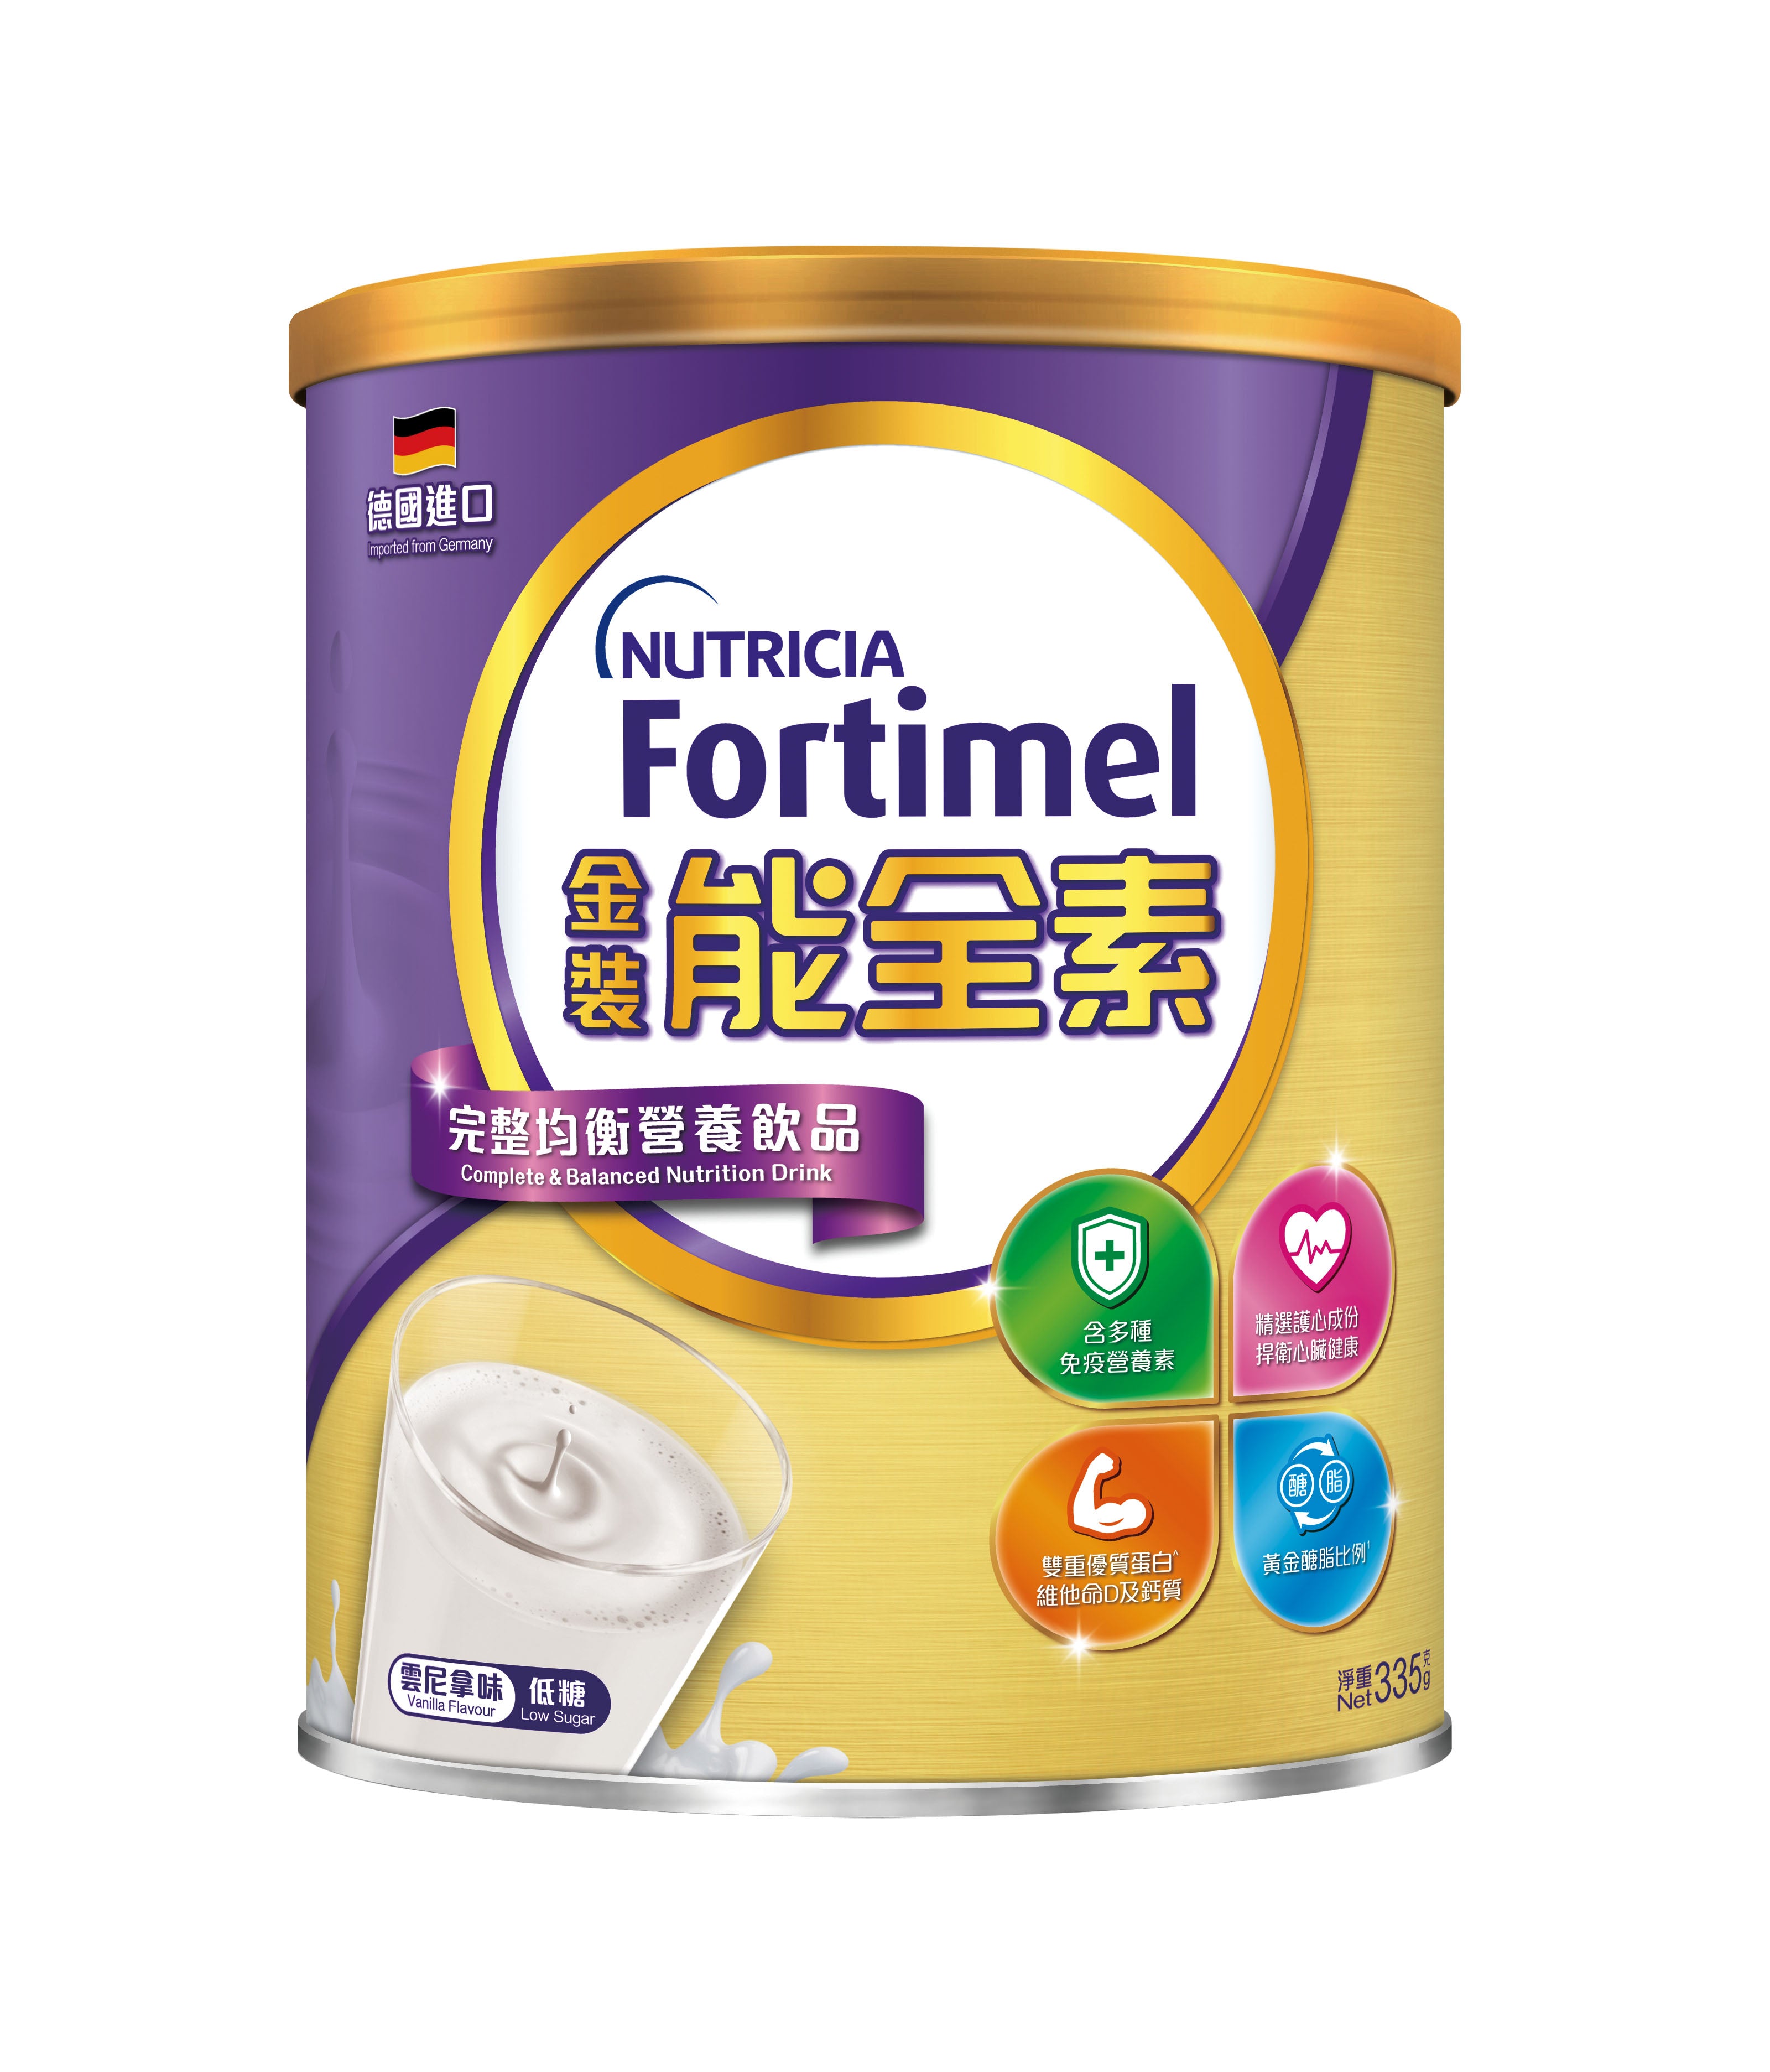 Nutricia Fortimel Powder